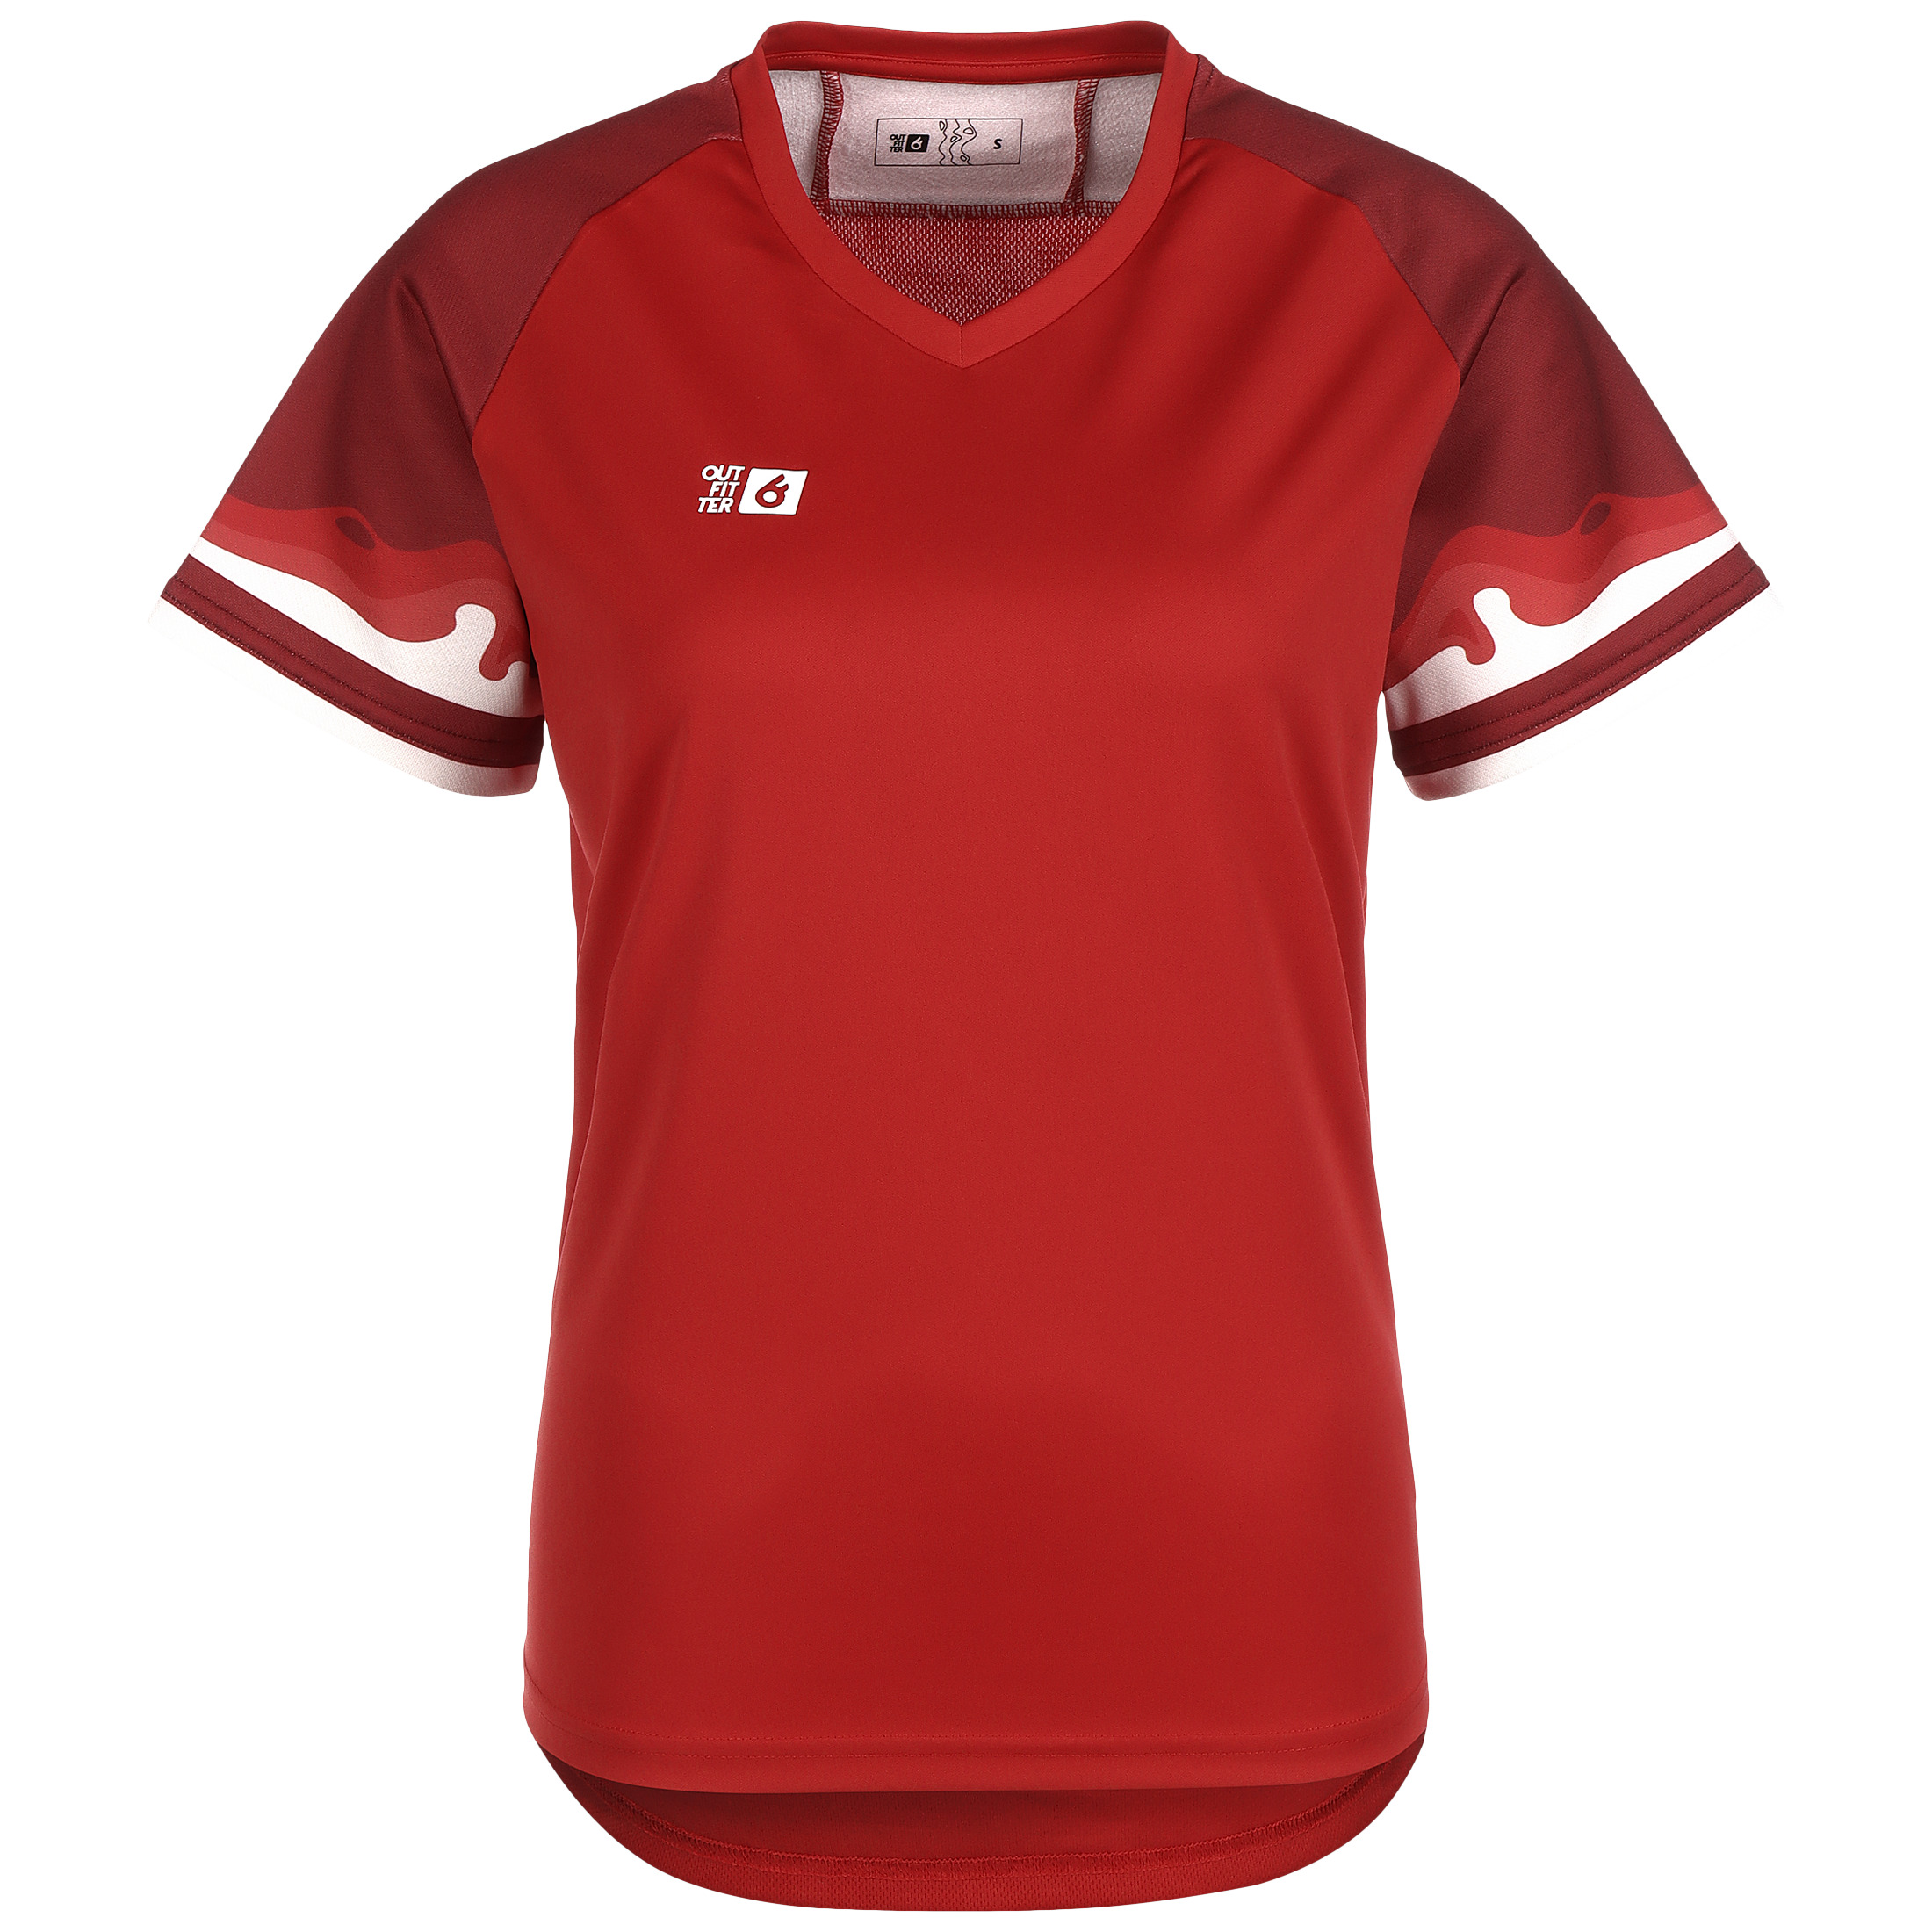 Спортивная футболка OUTFITTER Trikot OCEAN FABRICS MOANA, красный цена и фото